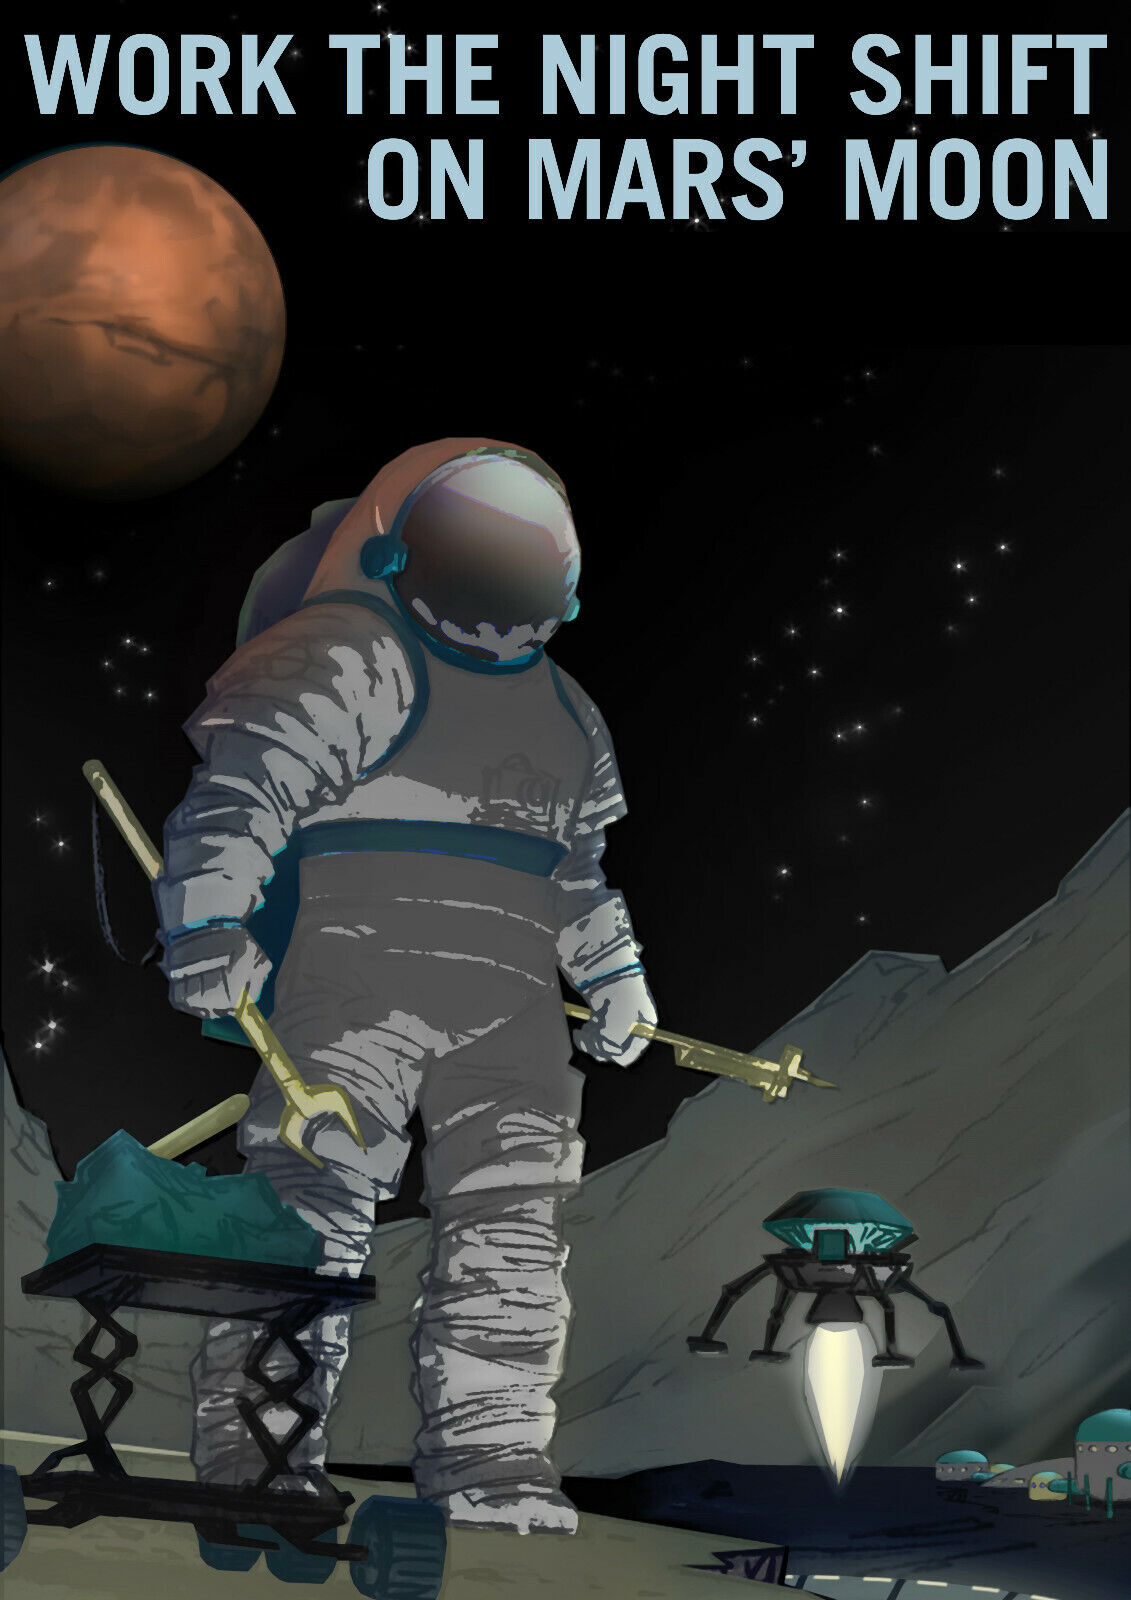 Space Poster - Mars Job Recruitment - Night Shift Work - NASA - A4 Wall Art